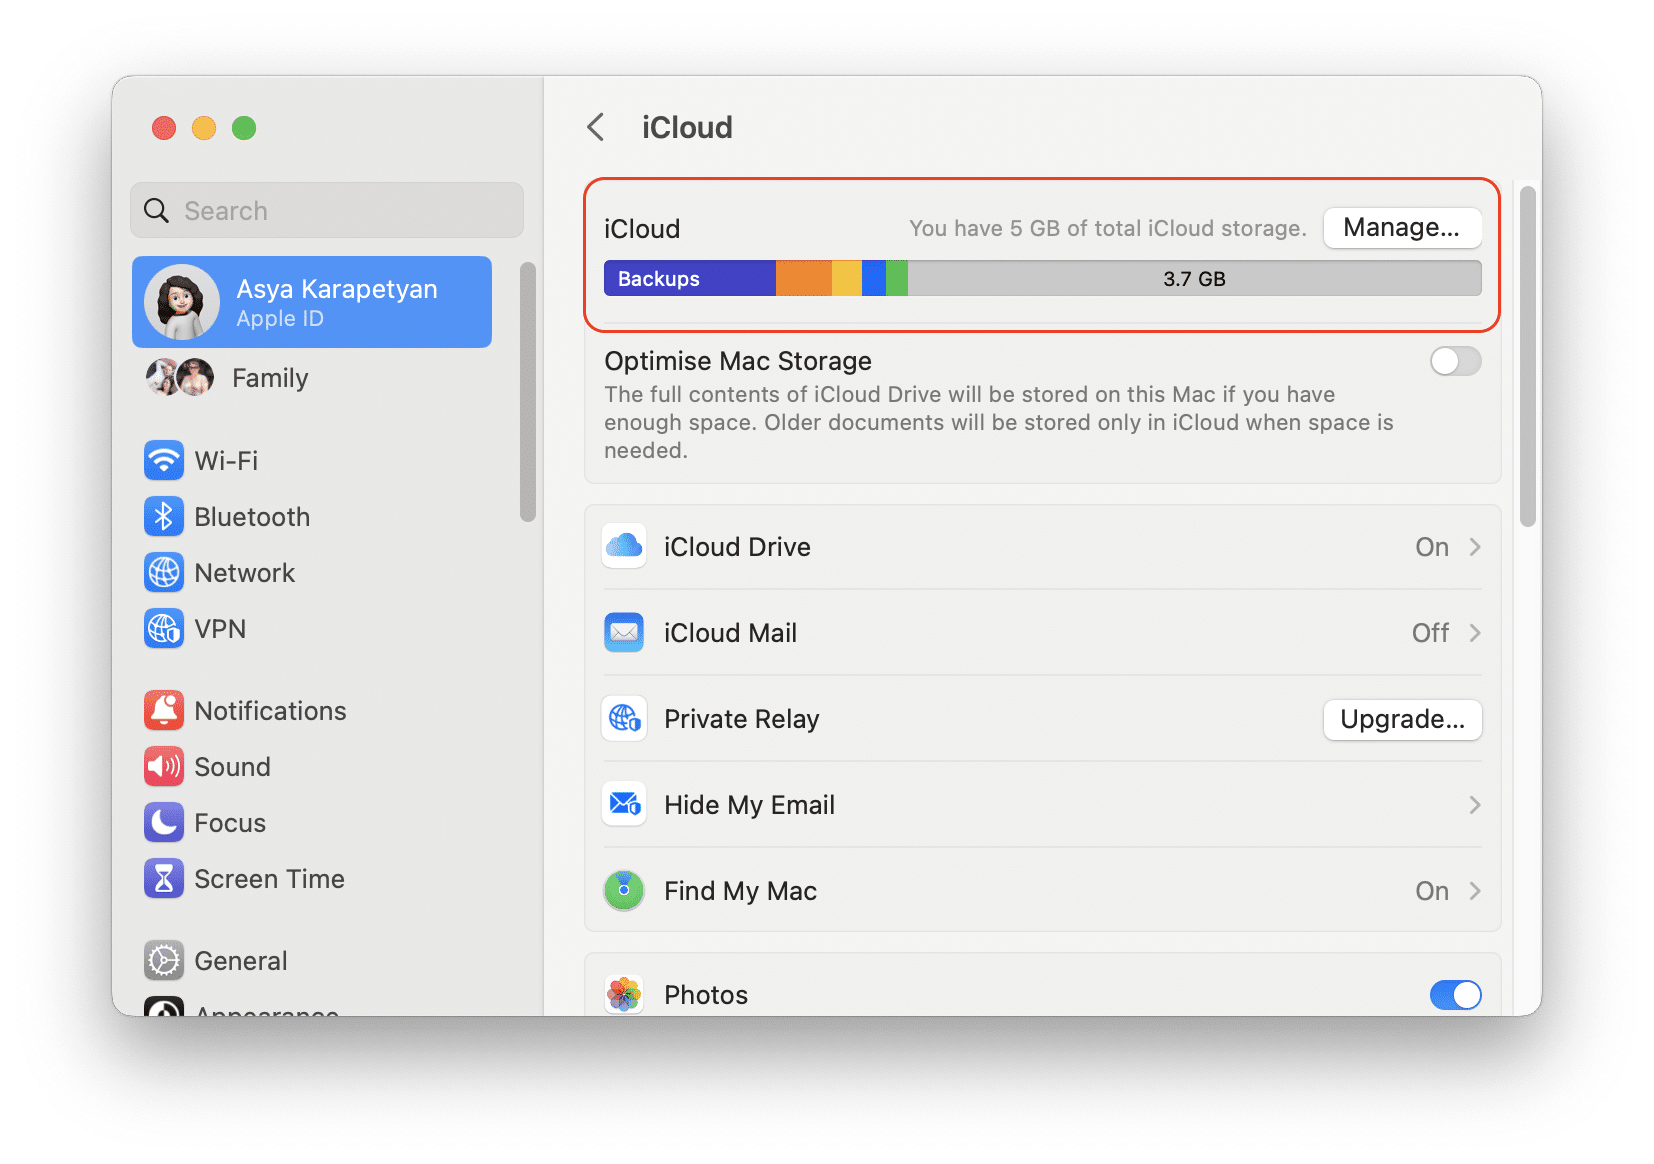 System settings window showing iCloud storage